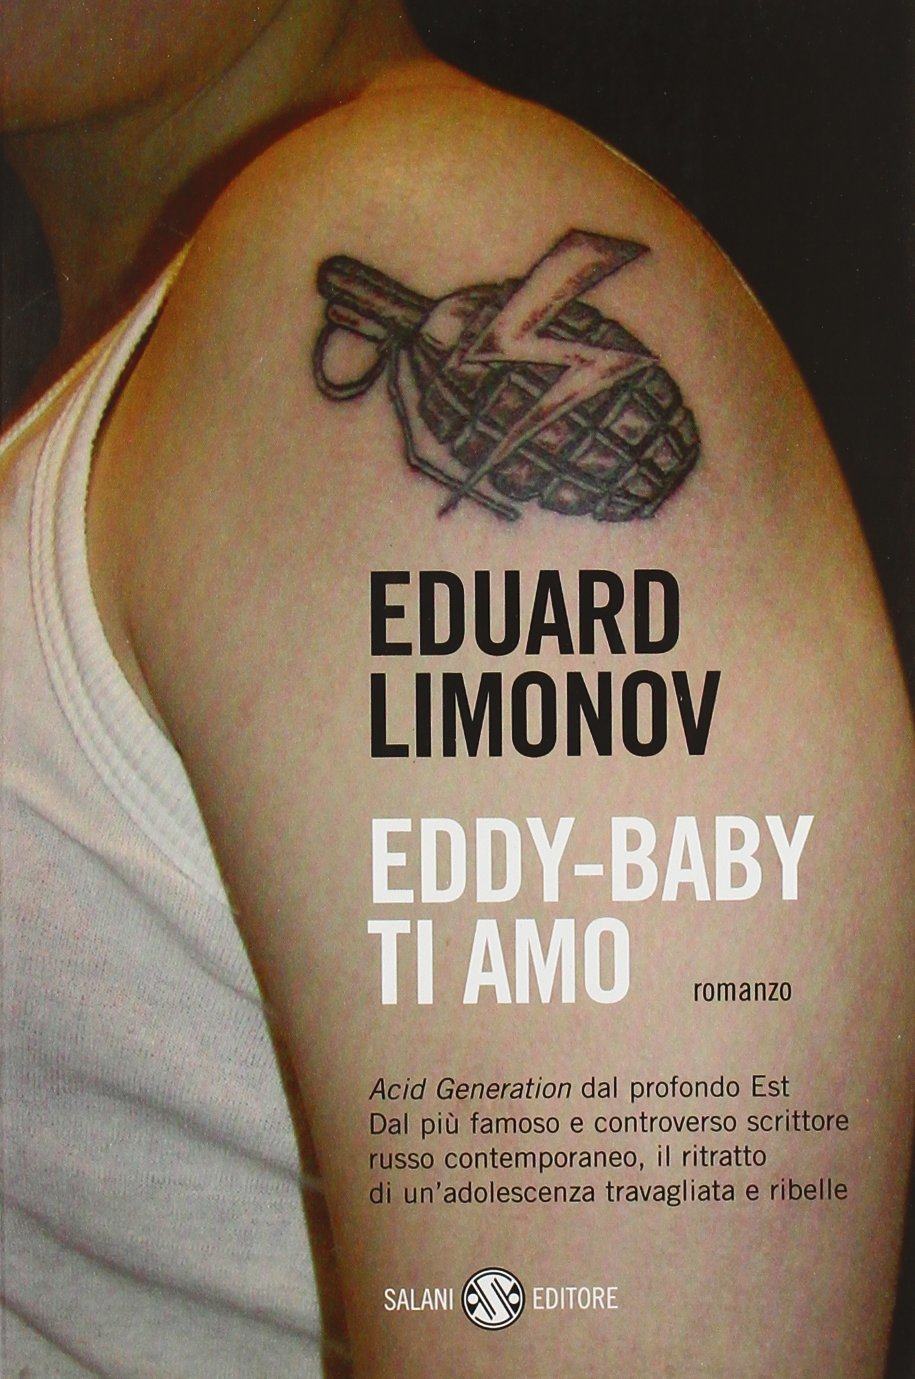 EDDY-BABY TI AMO